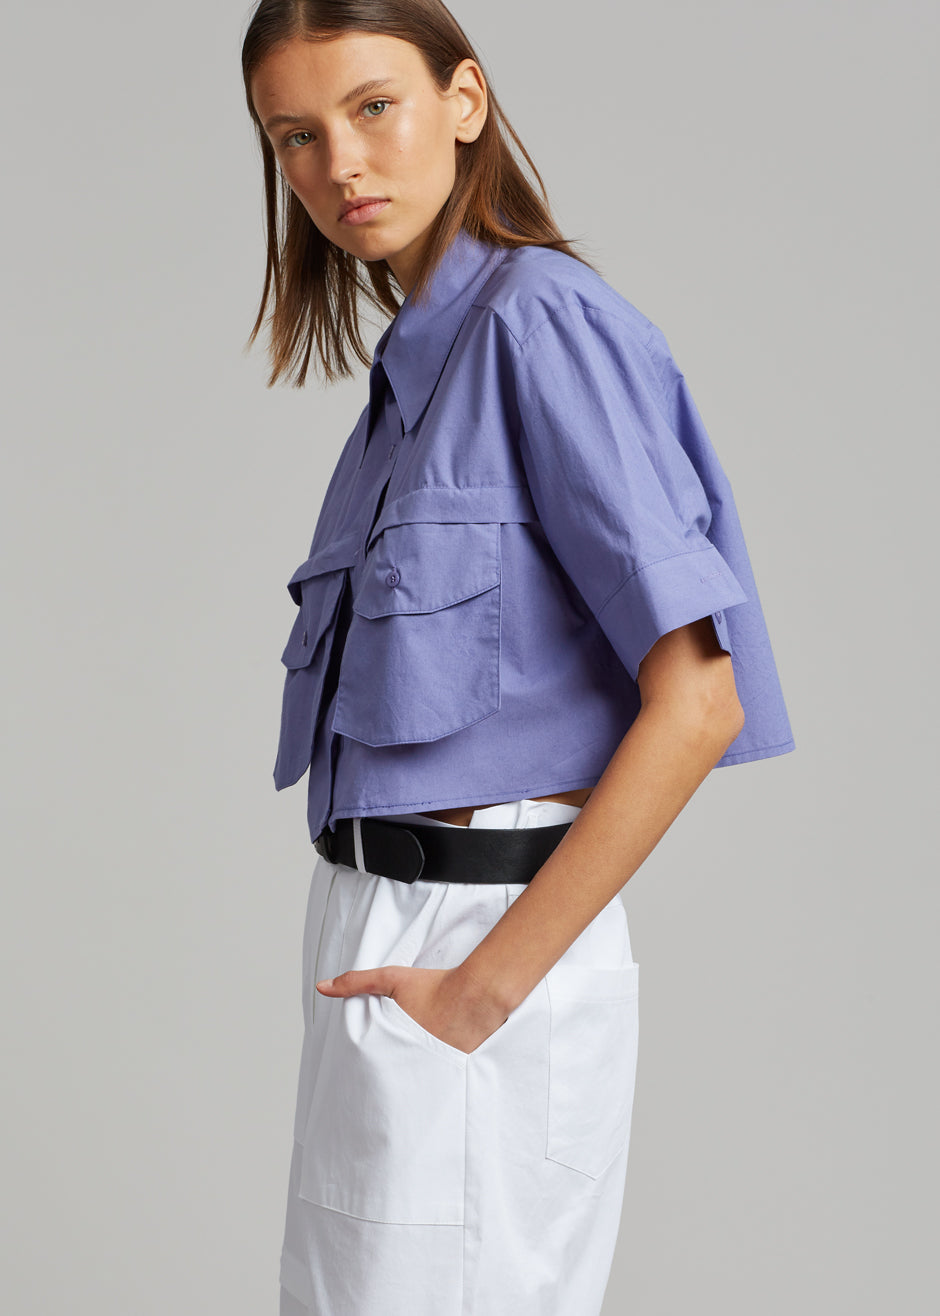 Ada Cropped Pocket Shirt - Purple - 2